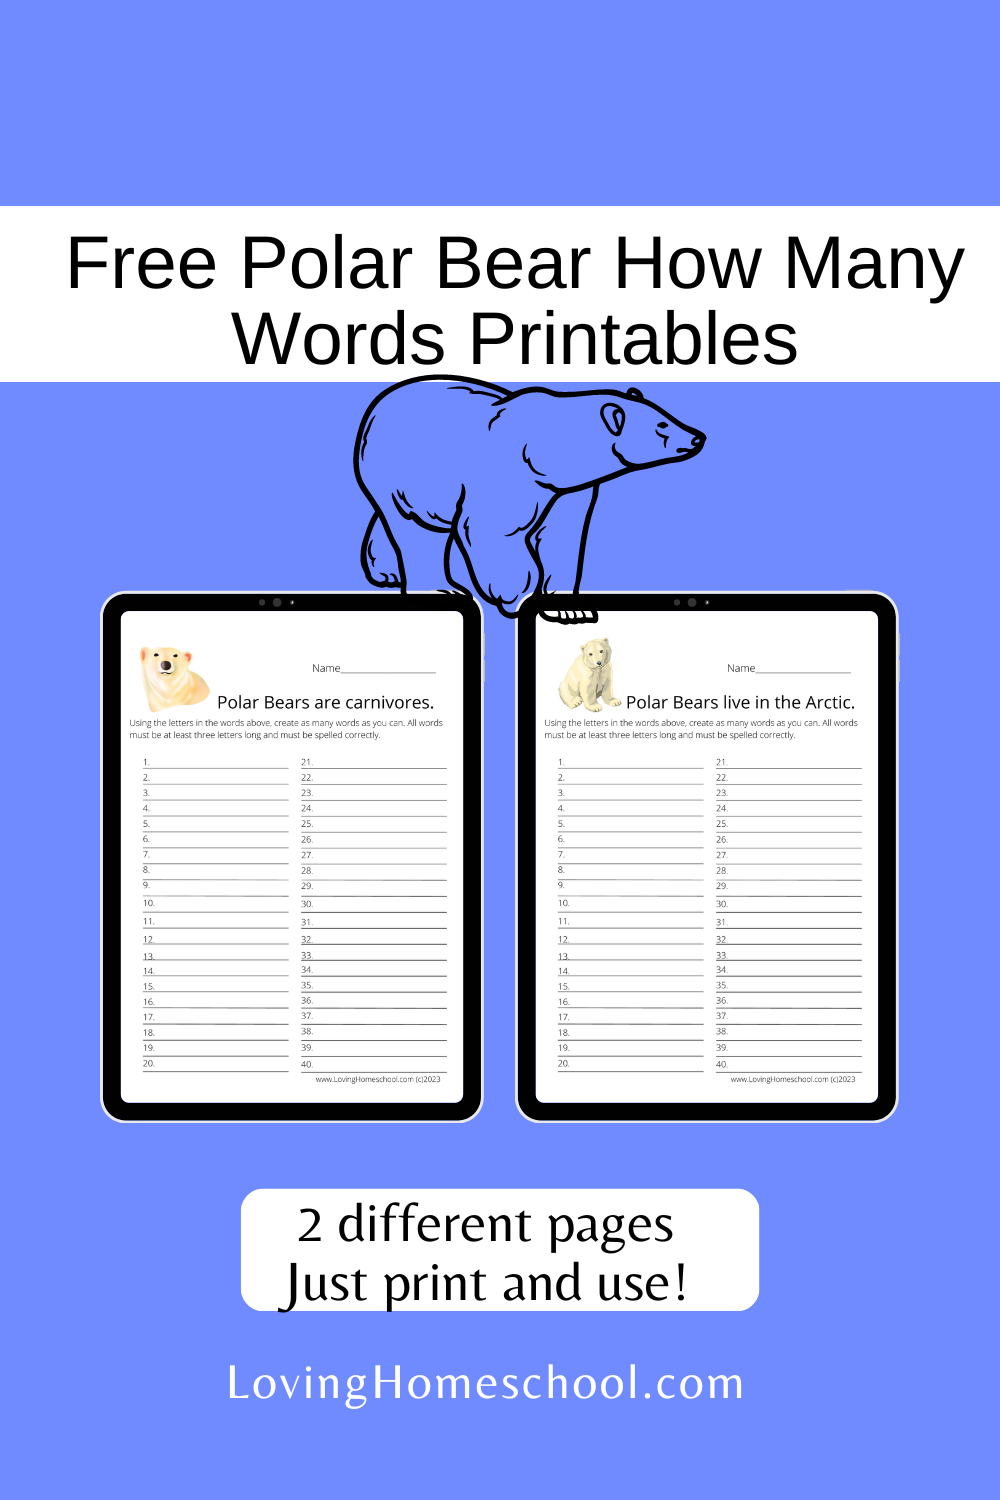 Free Polar Bear How Many Words Printables Pinterest Pin